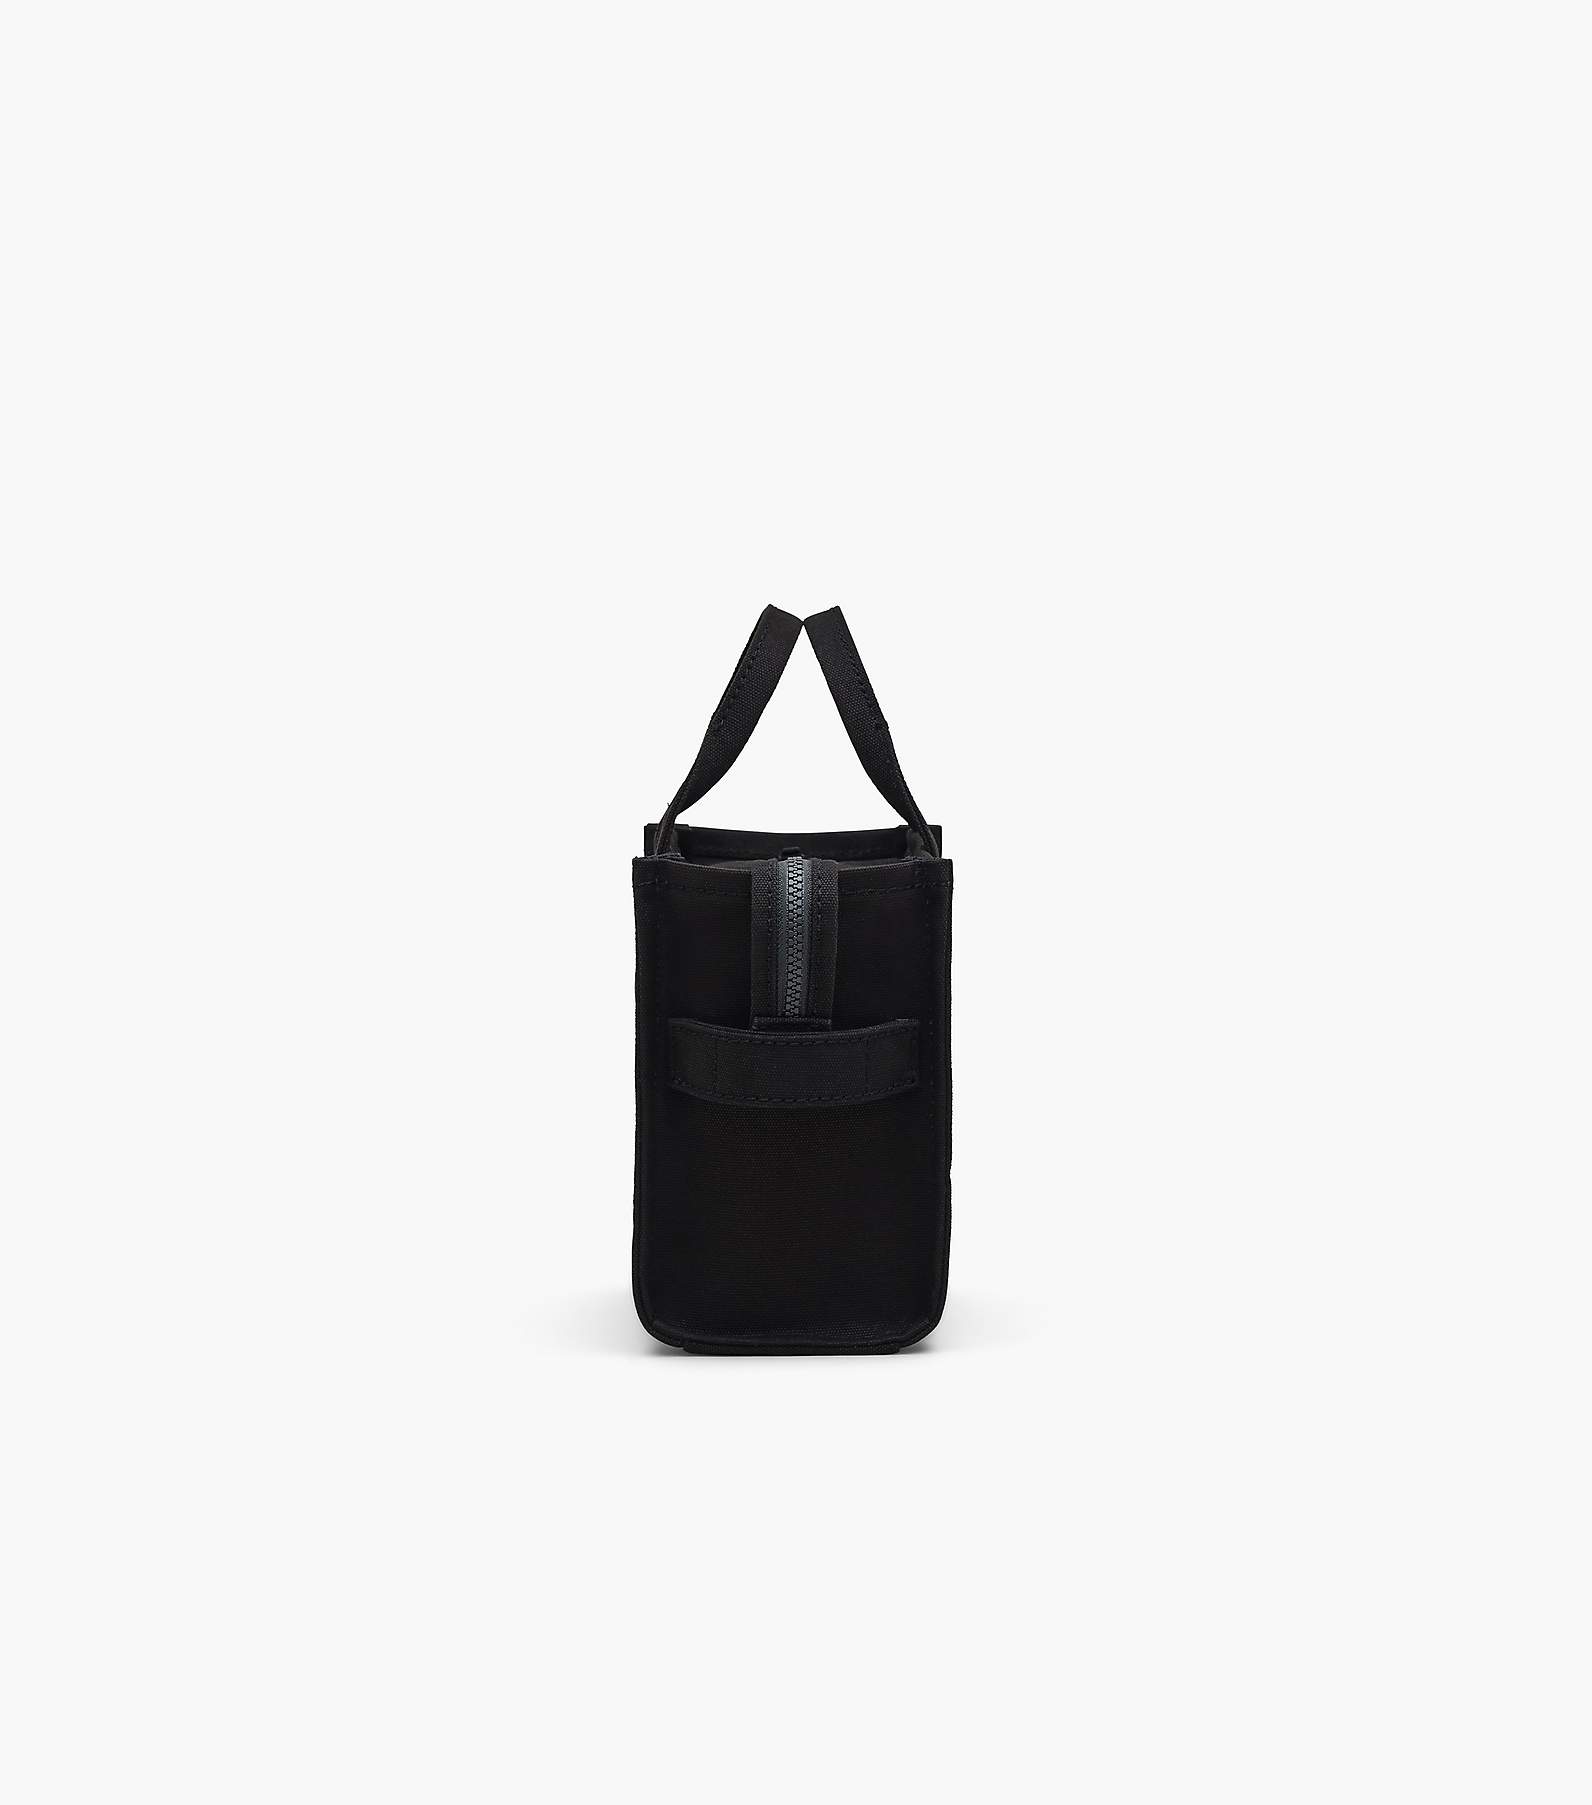 Marc Jacobs Snapshot handbag - Colorblock Small Snapshot White Red Navy